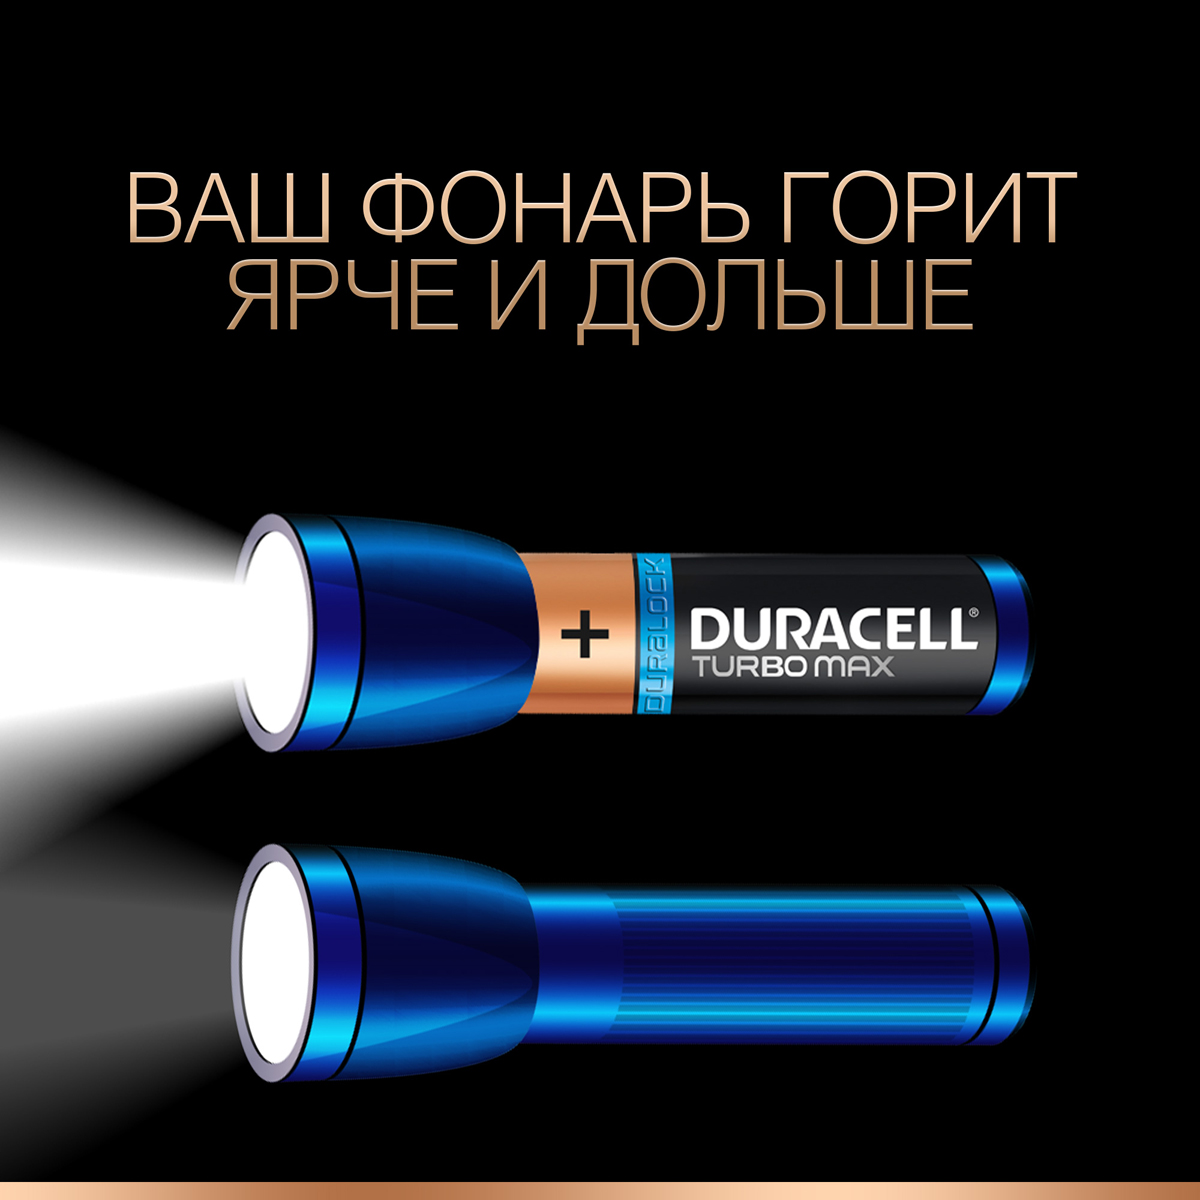 фото Набор щелочных батареек Duracell Turbo Max, тип AA, 2 шт